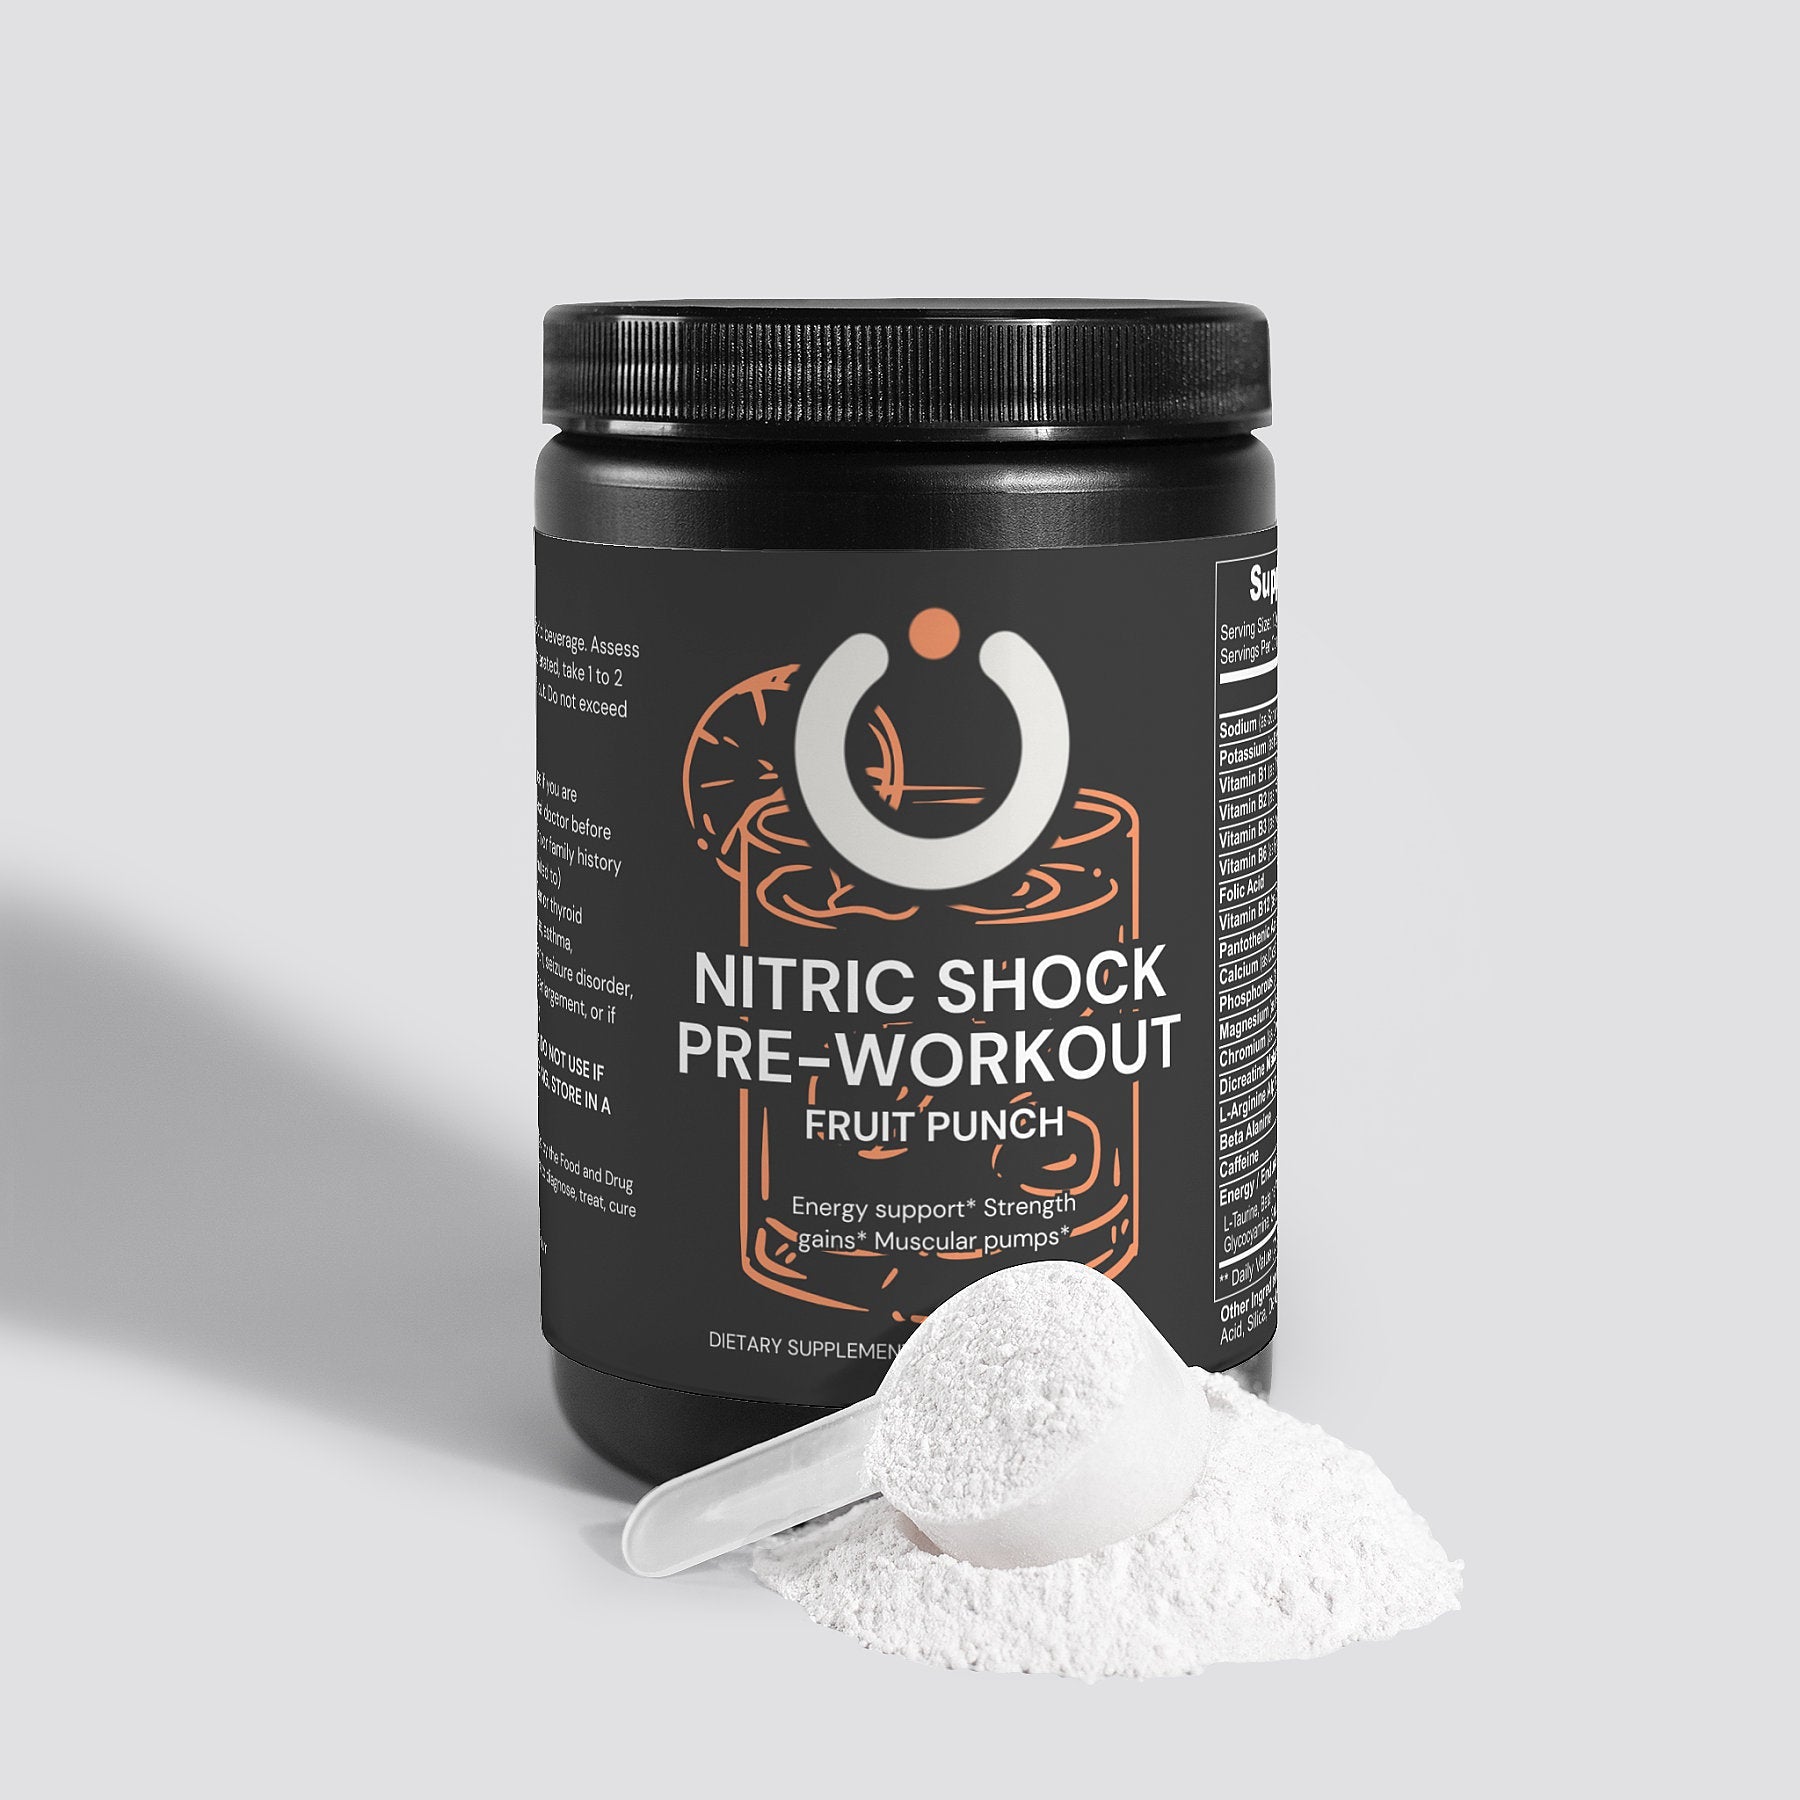 Nitric Shock Pre-Workout Powder, Fruit Punch Flavour - Opt1mum